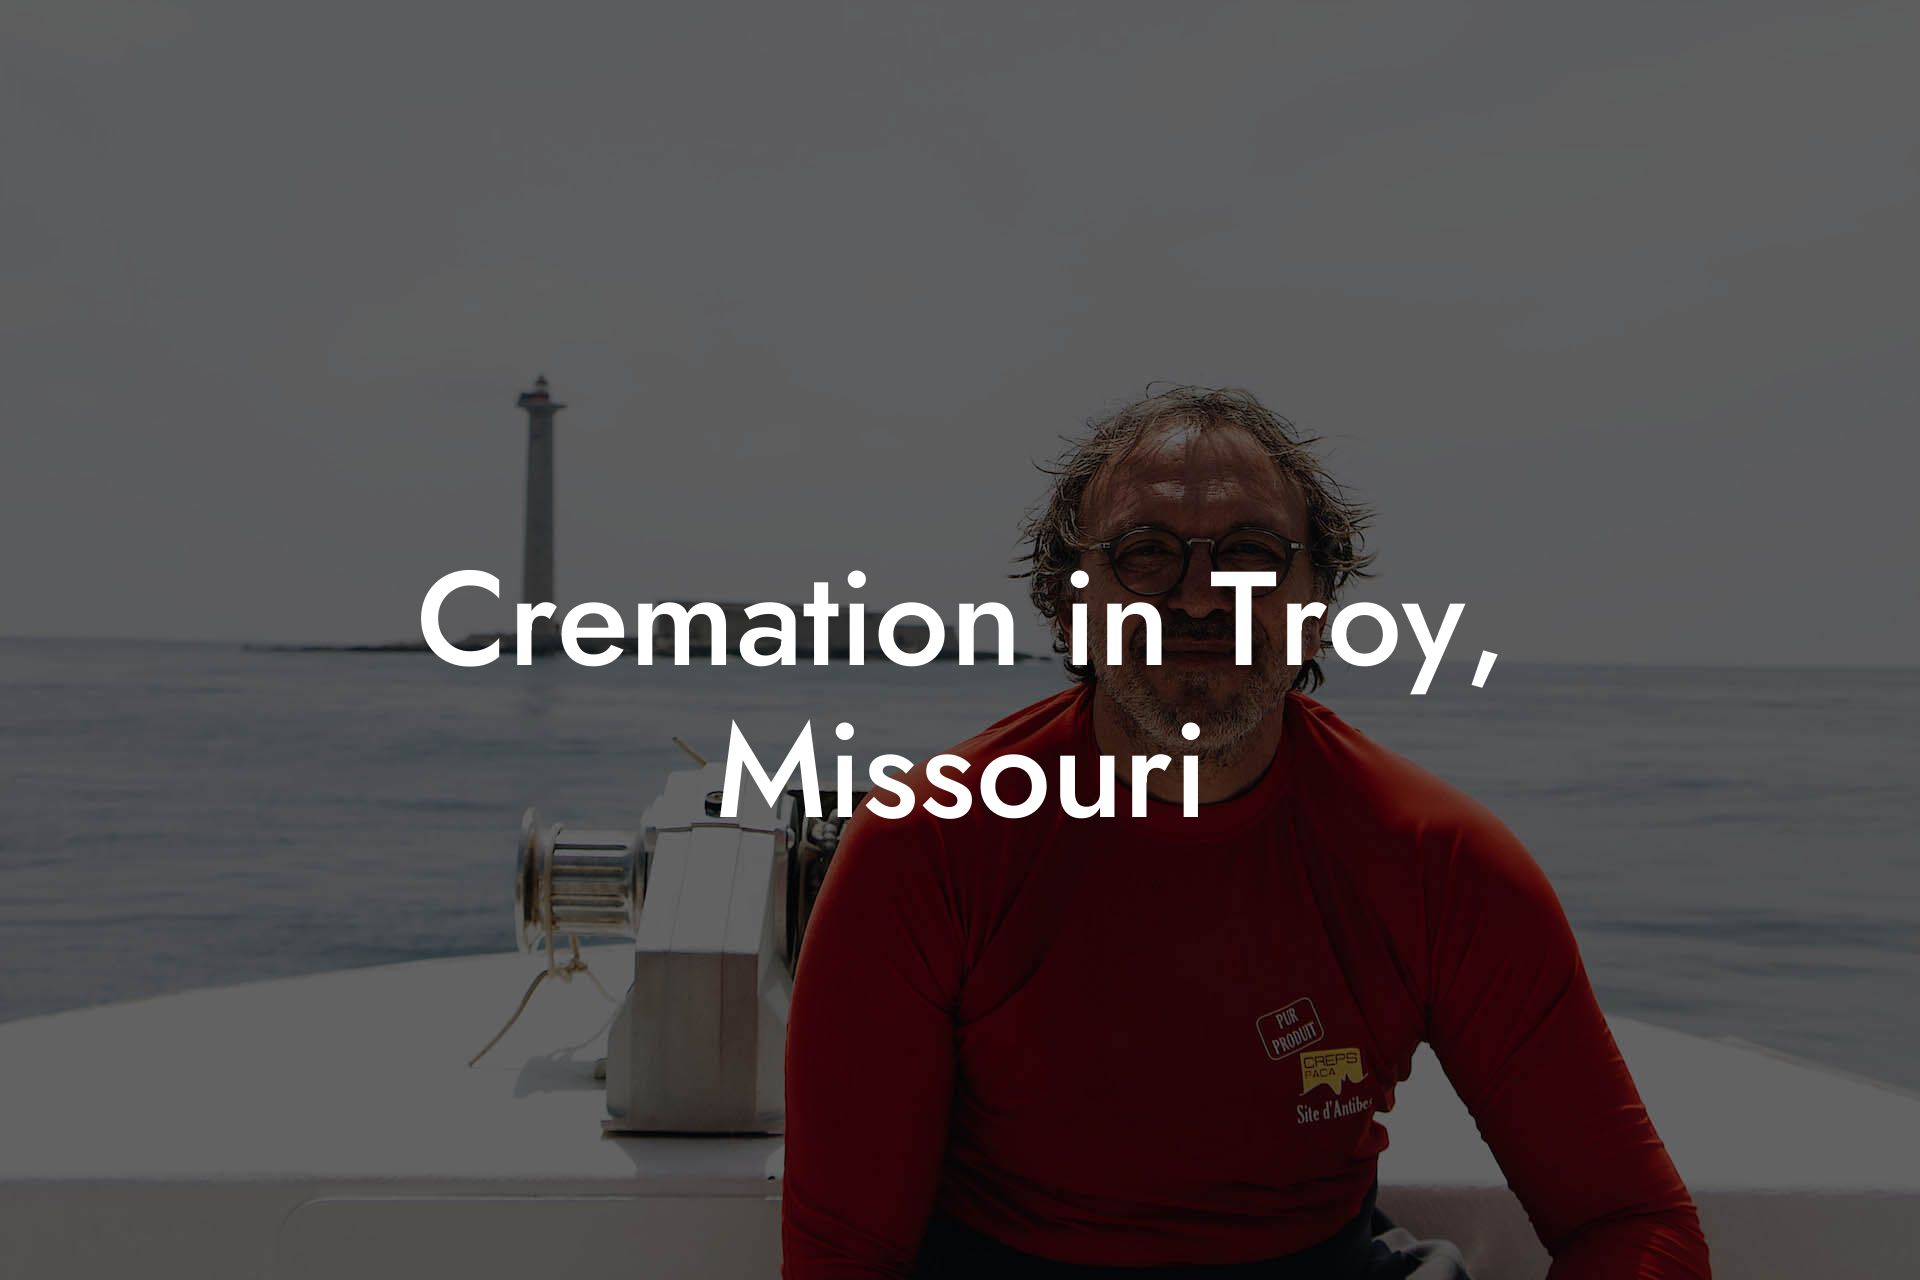 Cremation in Troy, Missouri